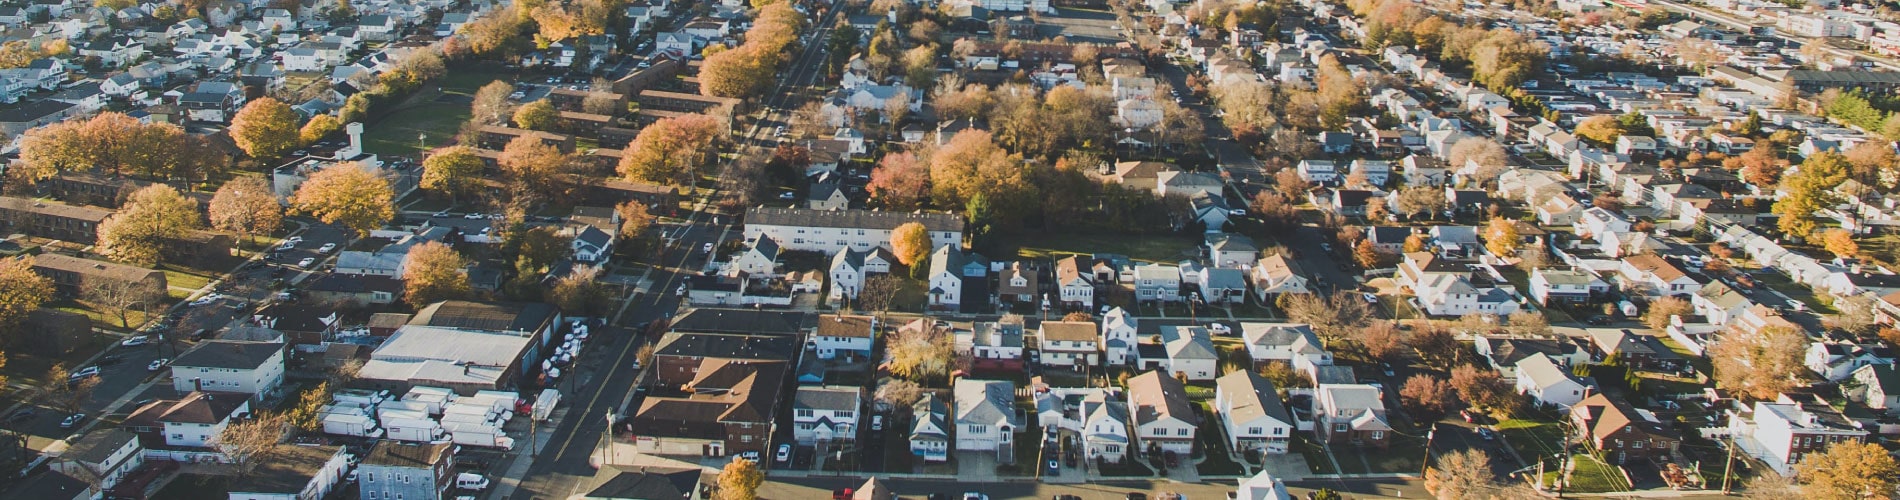 Aerial view of New Jersey neighborhood